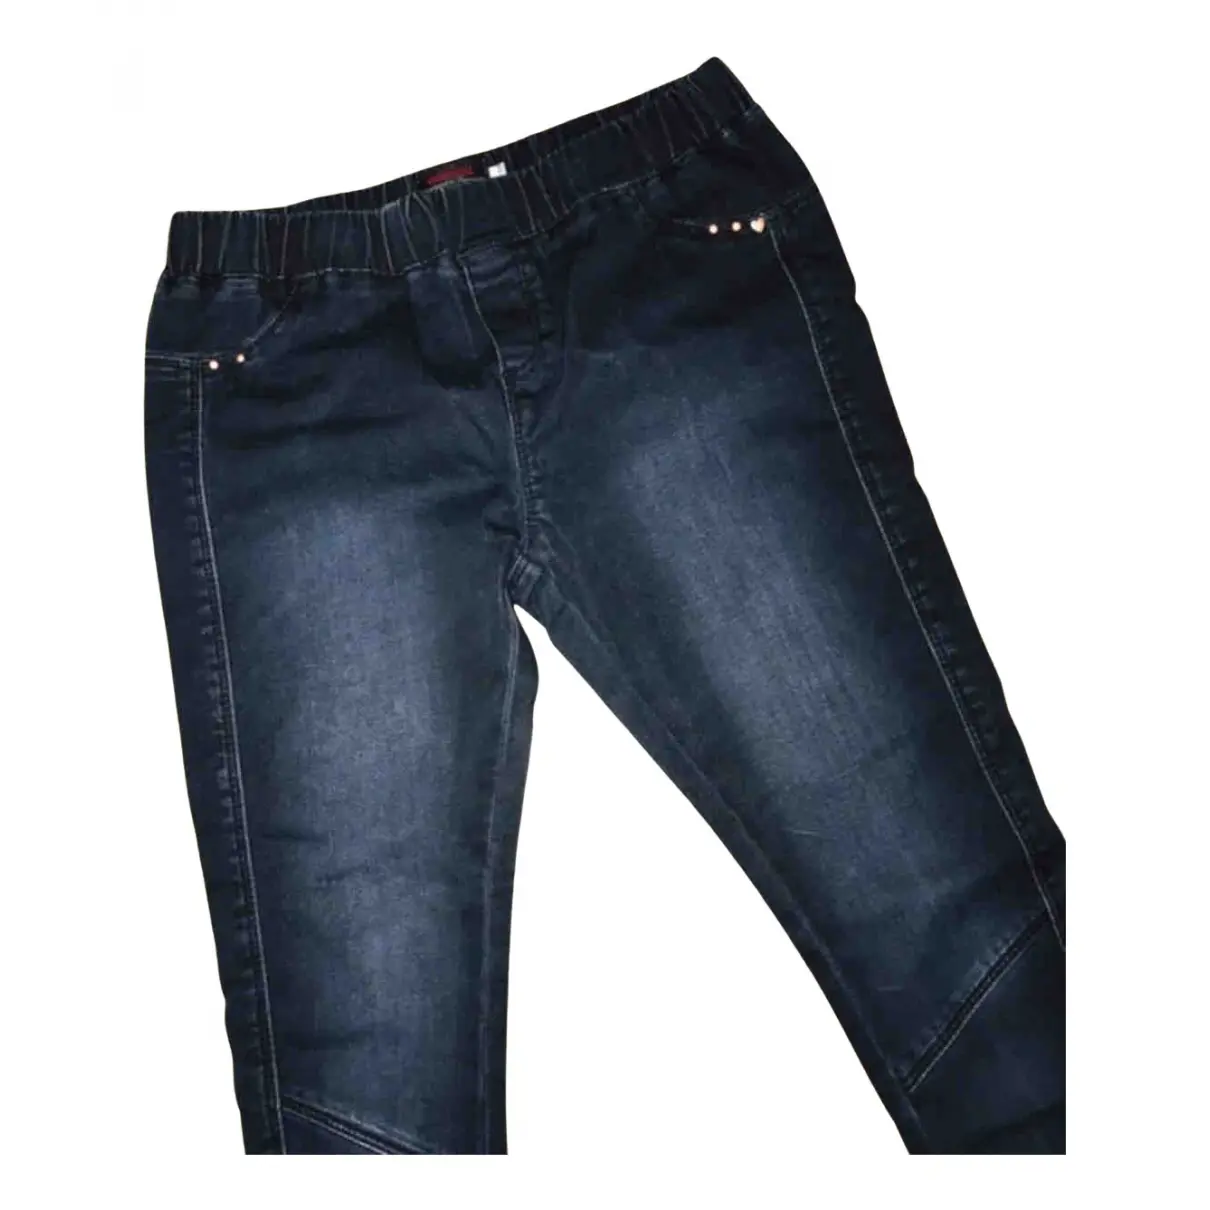 Buy CATIMINI Jeans online